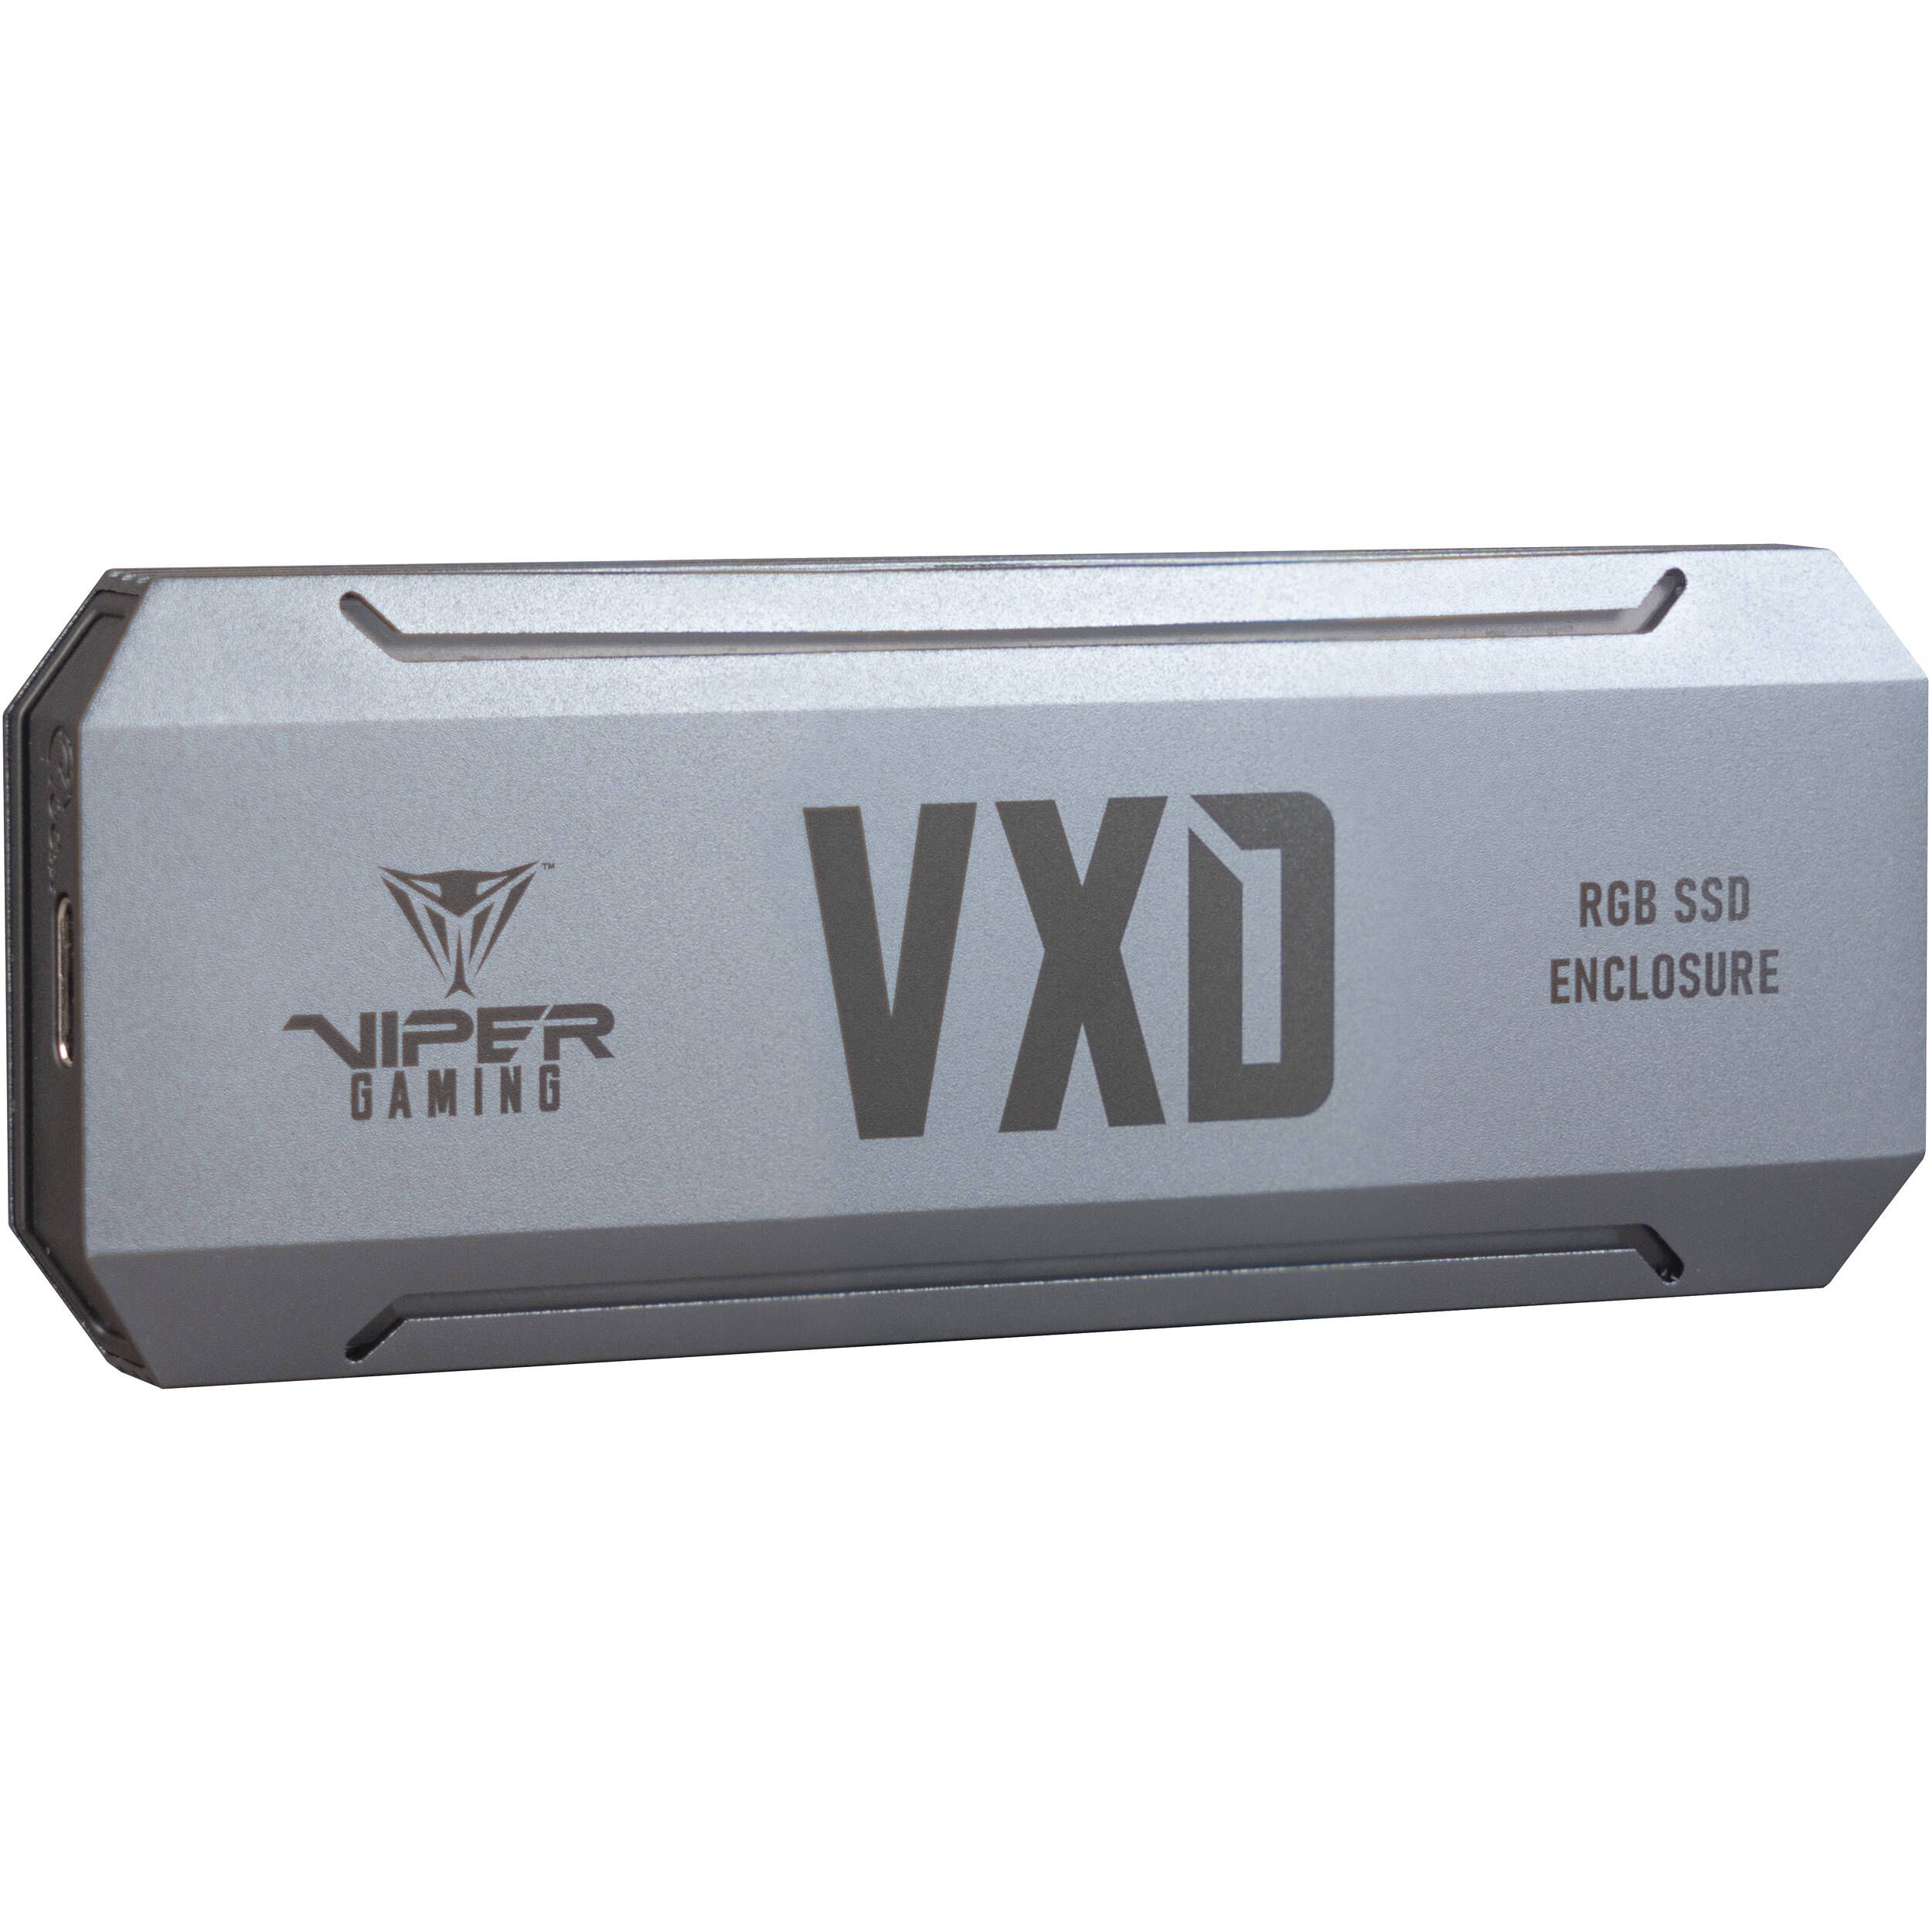 PATRIOT VIPER VXD RGB SSD Enclosure M.2 PCIe up to 1000 MB/s_1